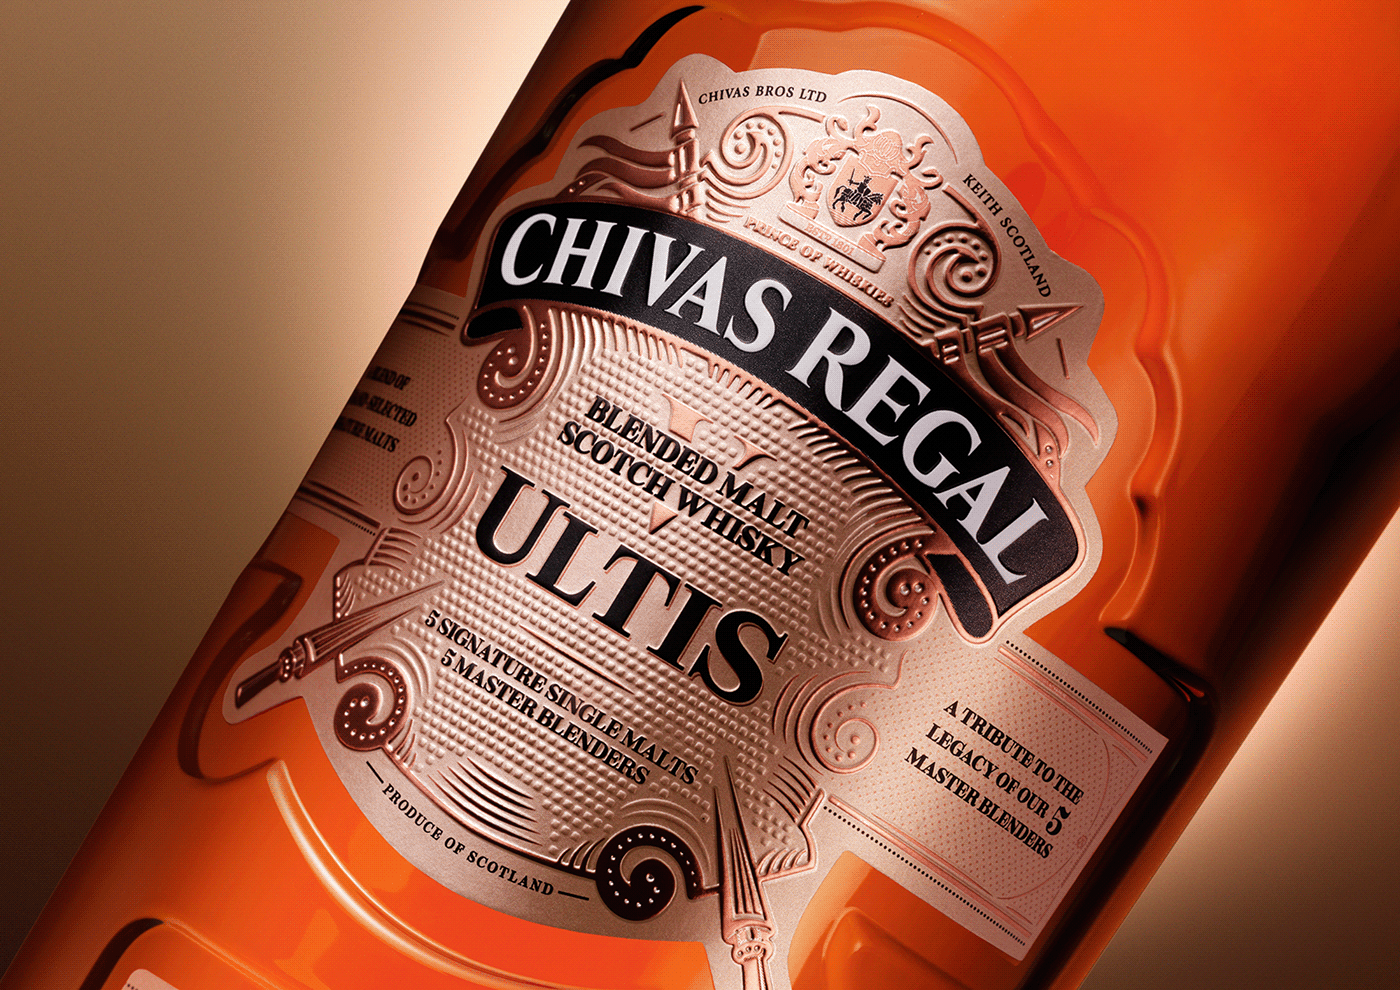 brand identity chivas regal Whisky Packaging alcohol drink bottle logo Social media post pentawards